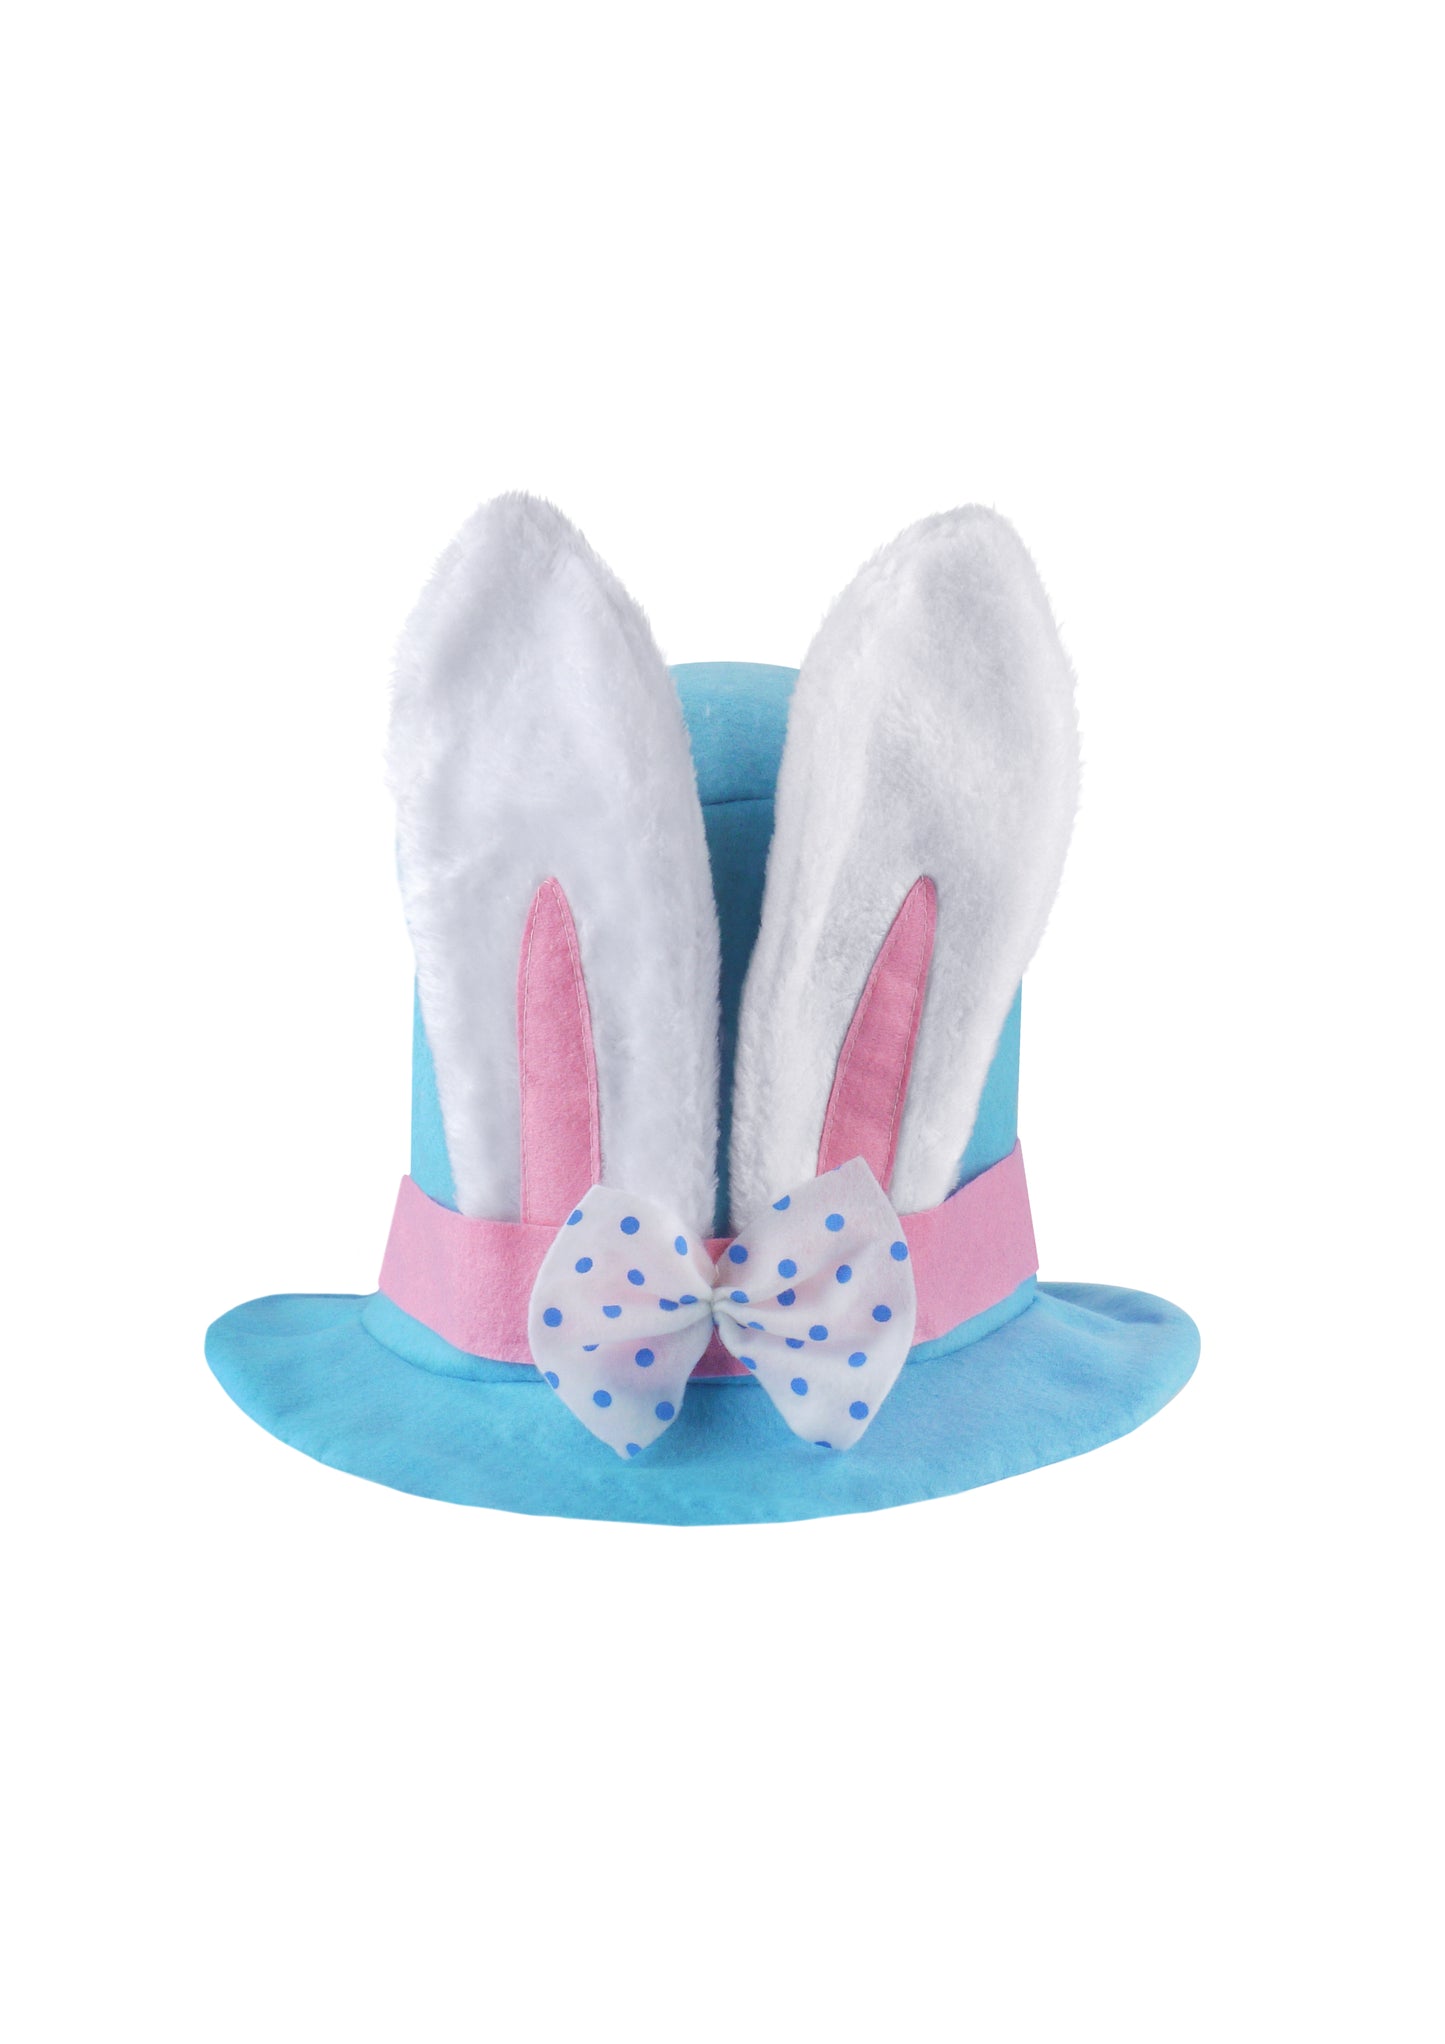 Children's Easter Bunny Top Hat - Adorable Rabbit Ear Headwear for Kids' Easter Celebrations